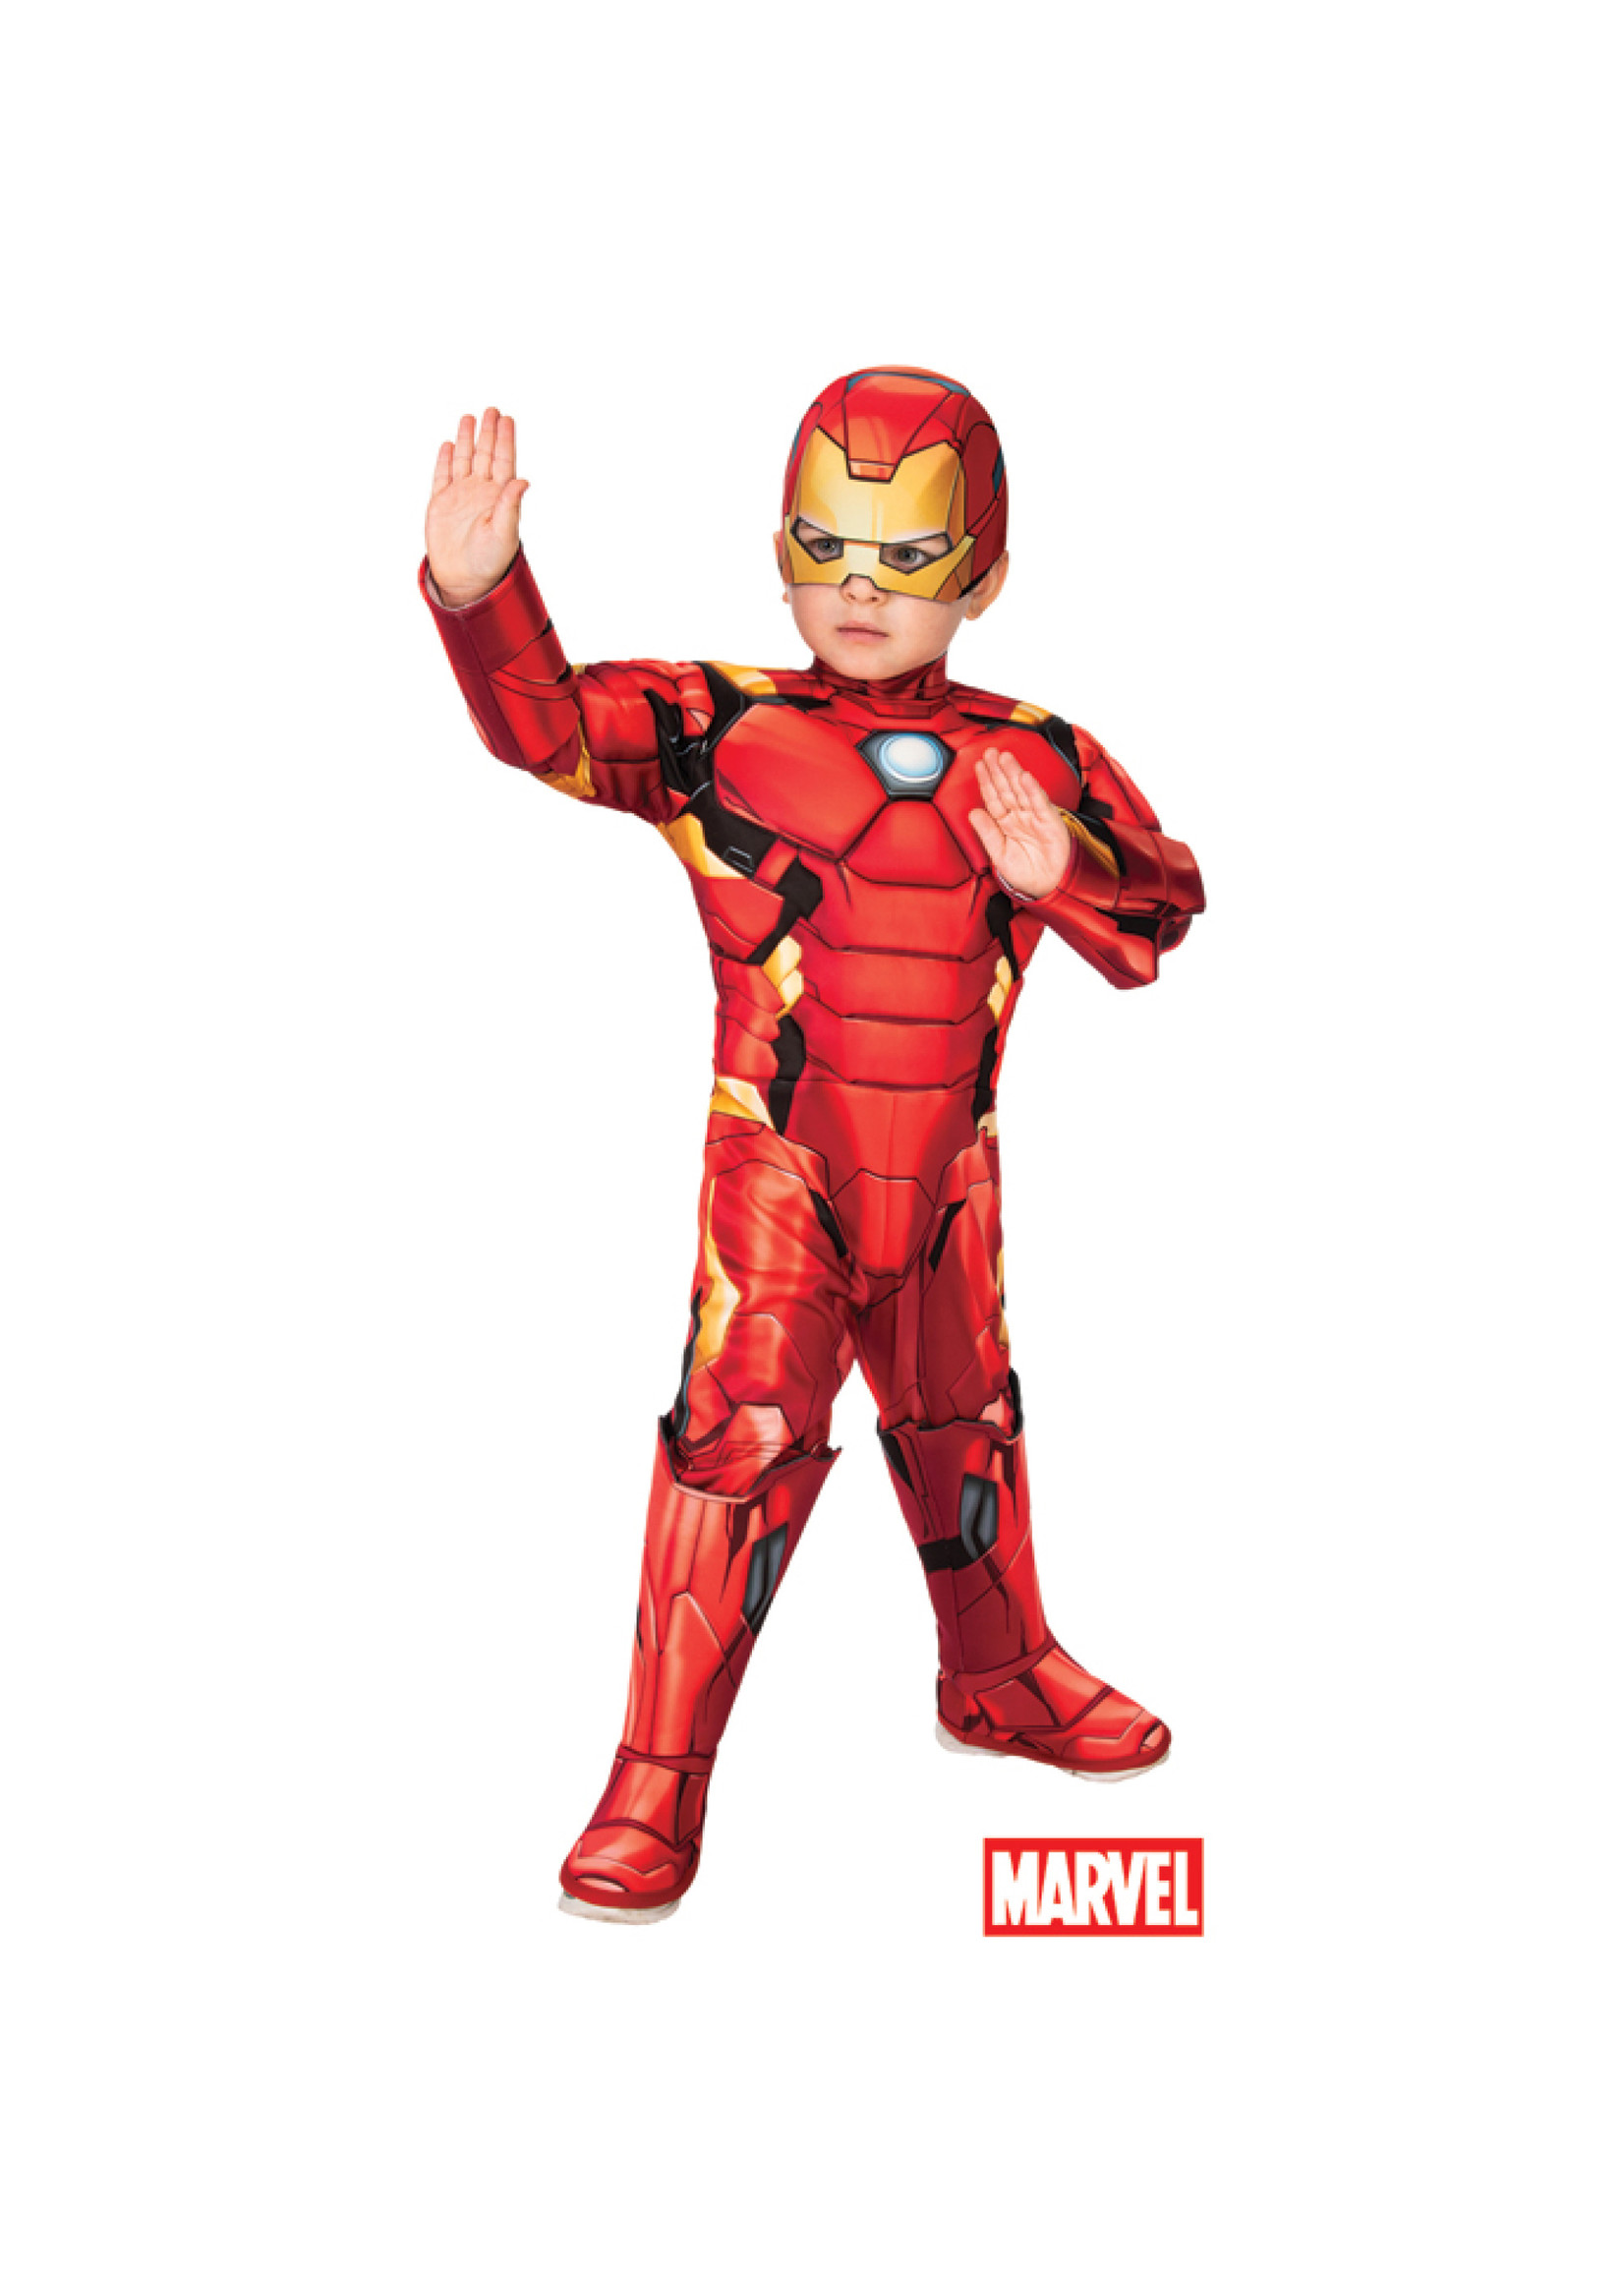 RUBIES Iron Man Adventures Deluxe - Toddler